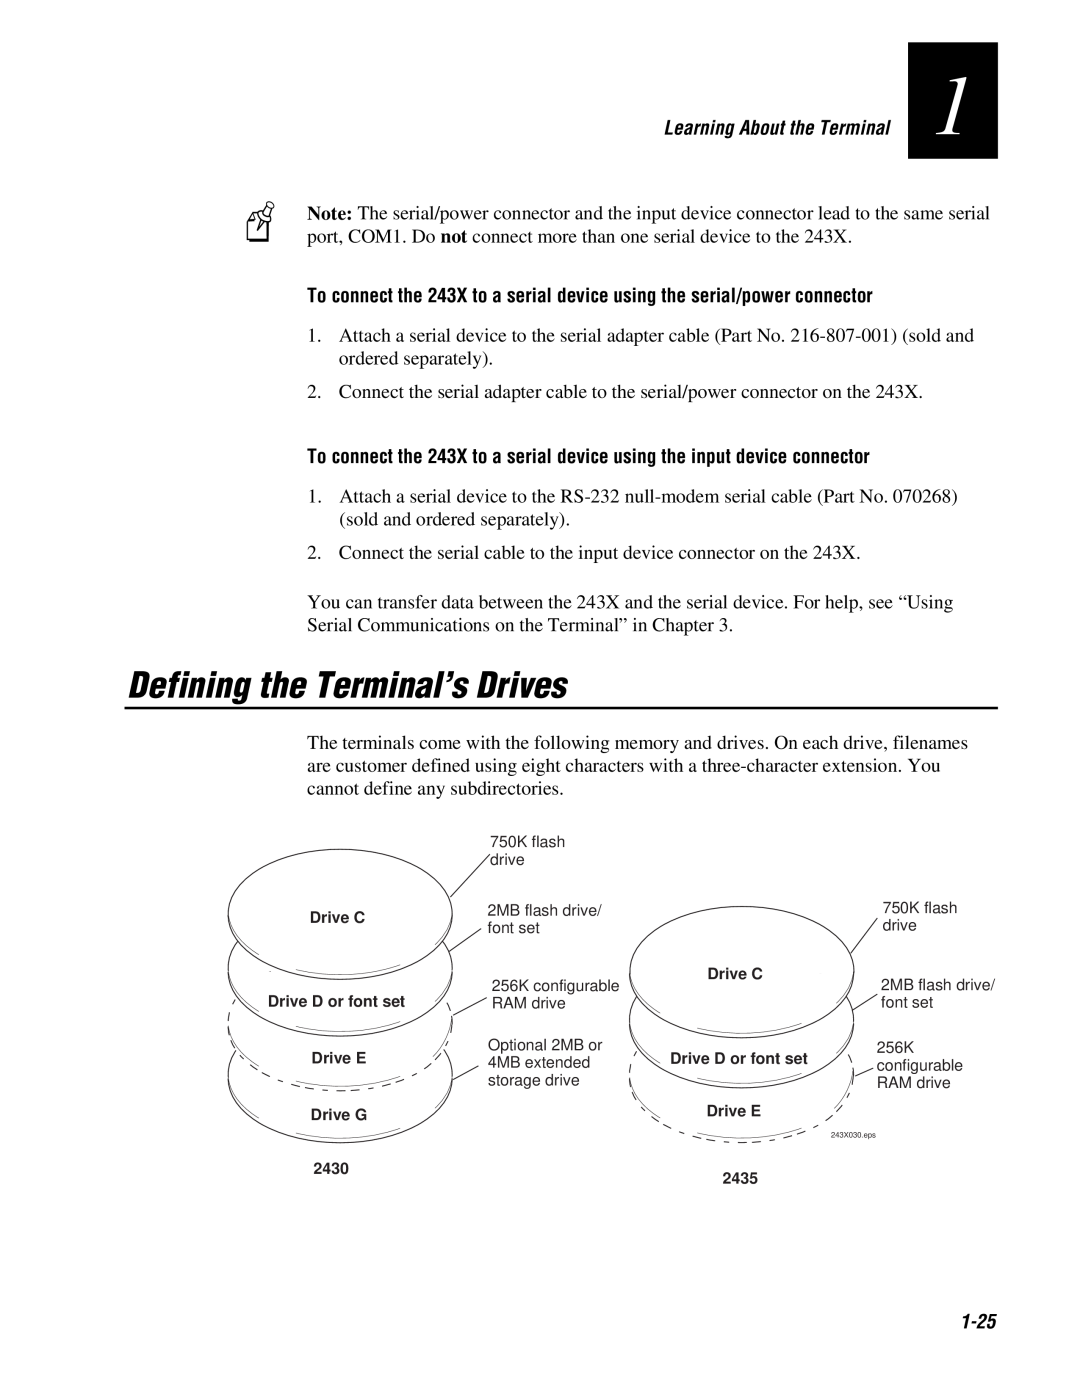 IBM user manual Defining the Terminal’s Drives, 1-25, 243X030.eps 